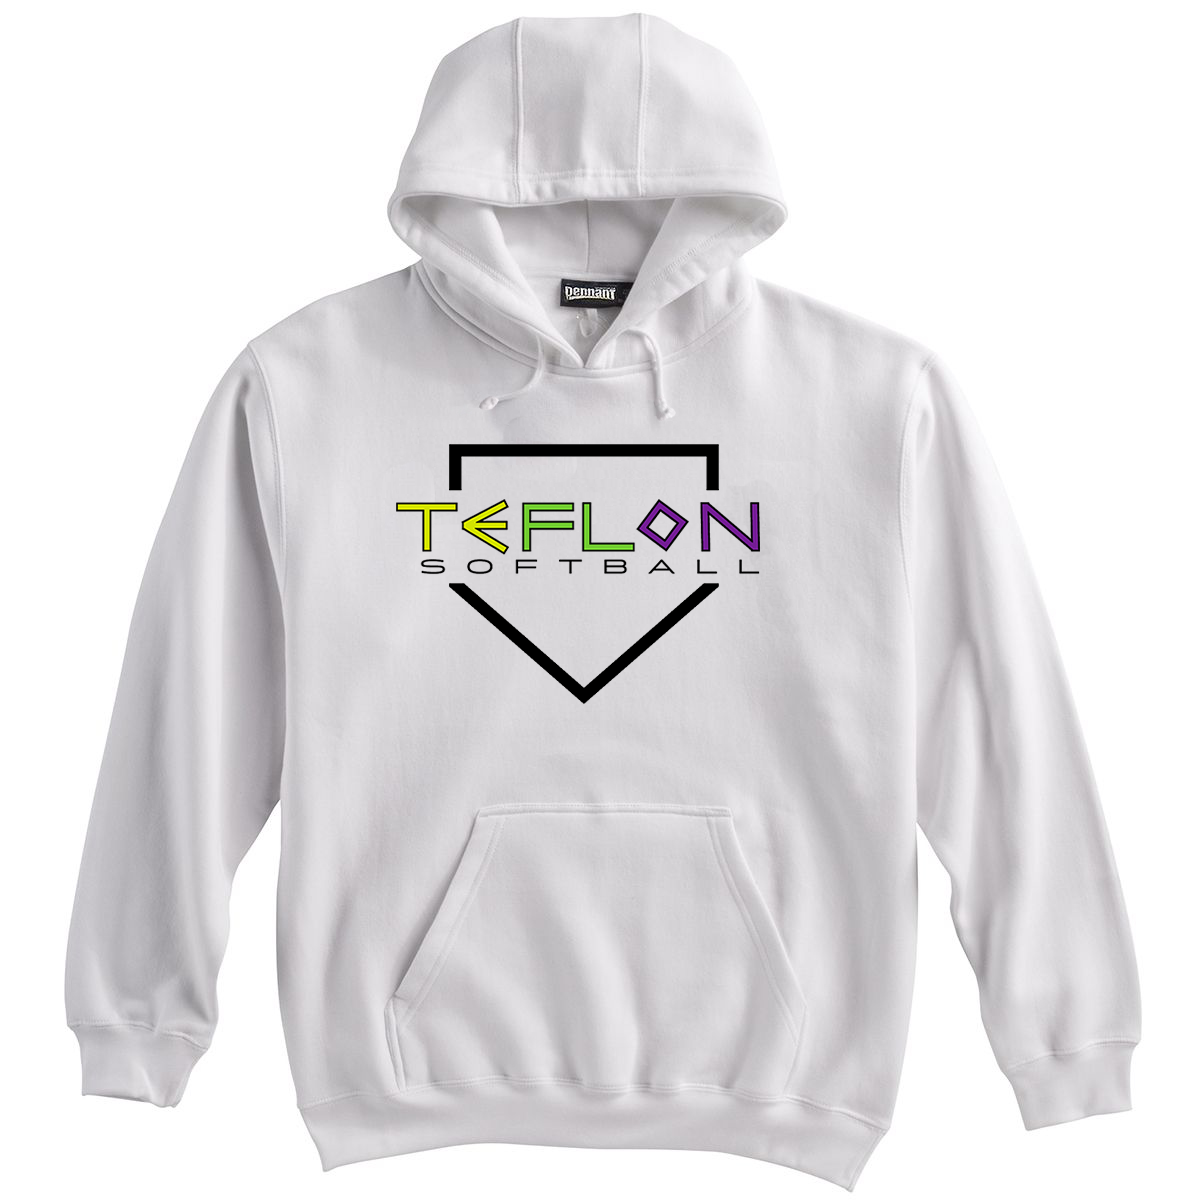 Team Teflon Softball Sweatshirt